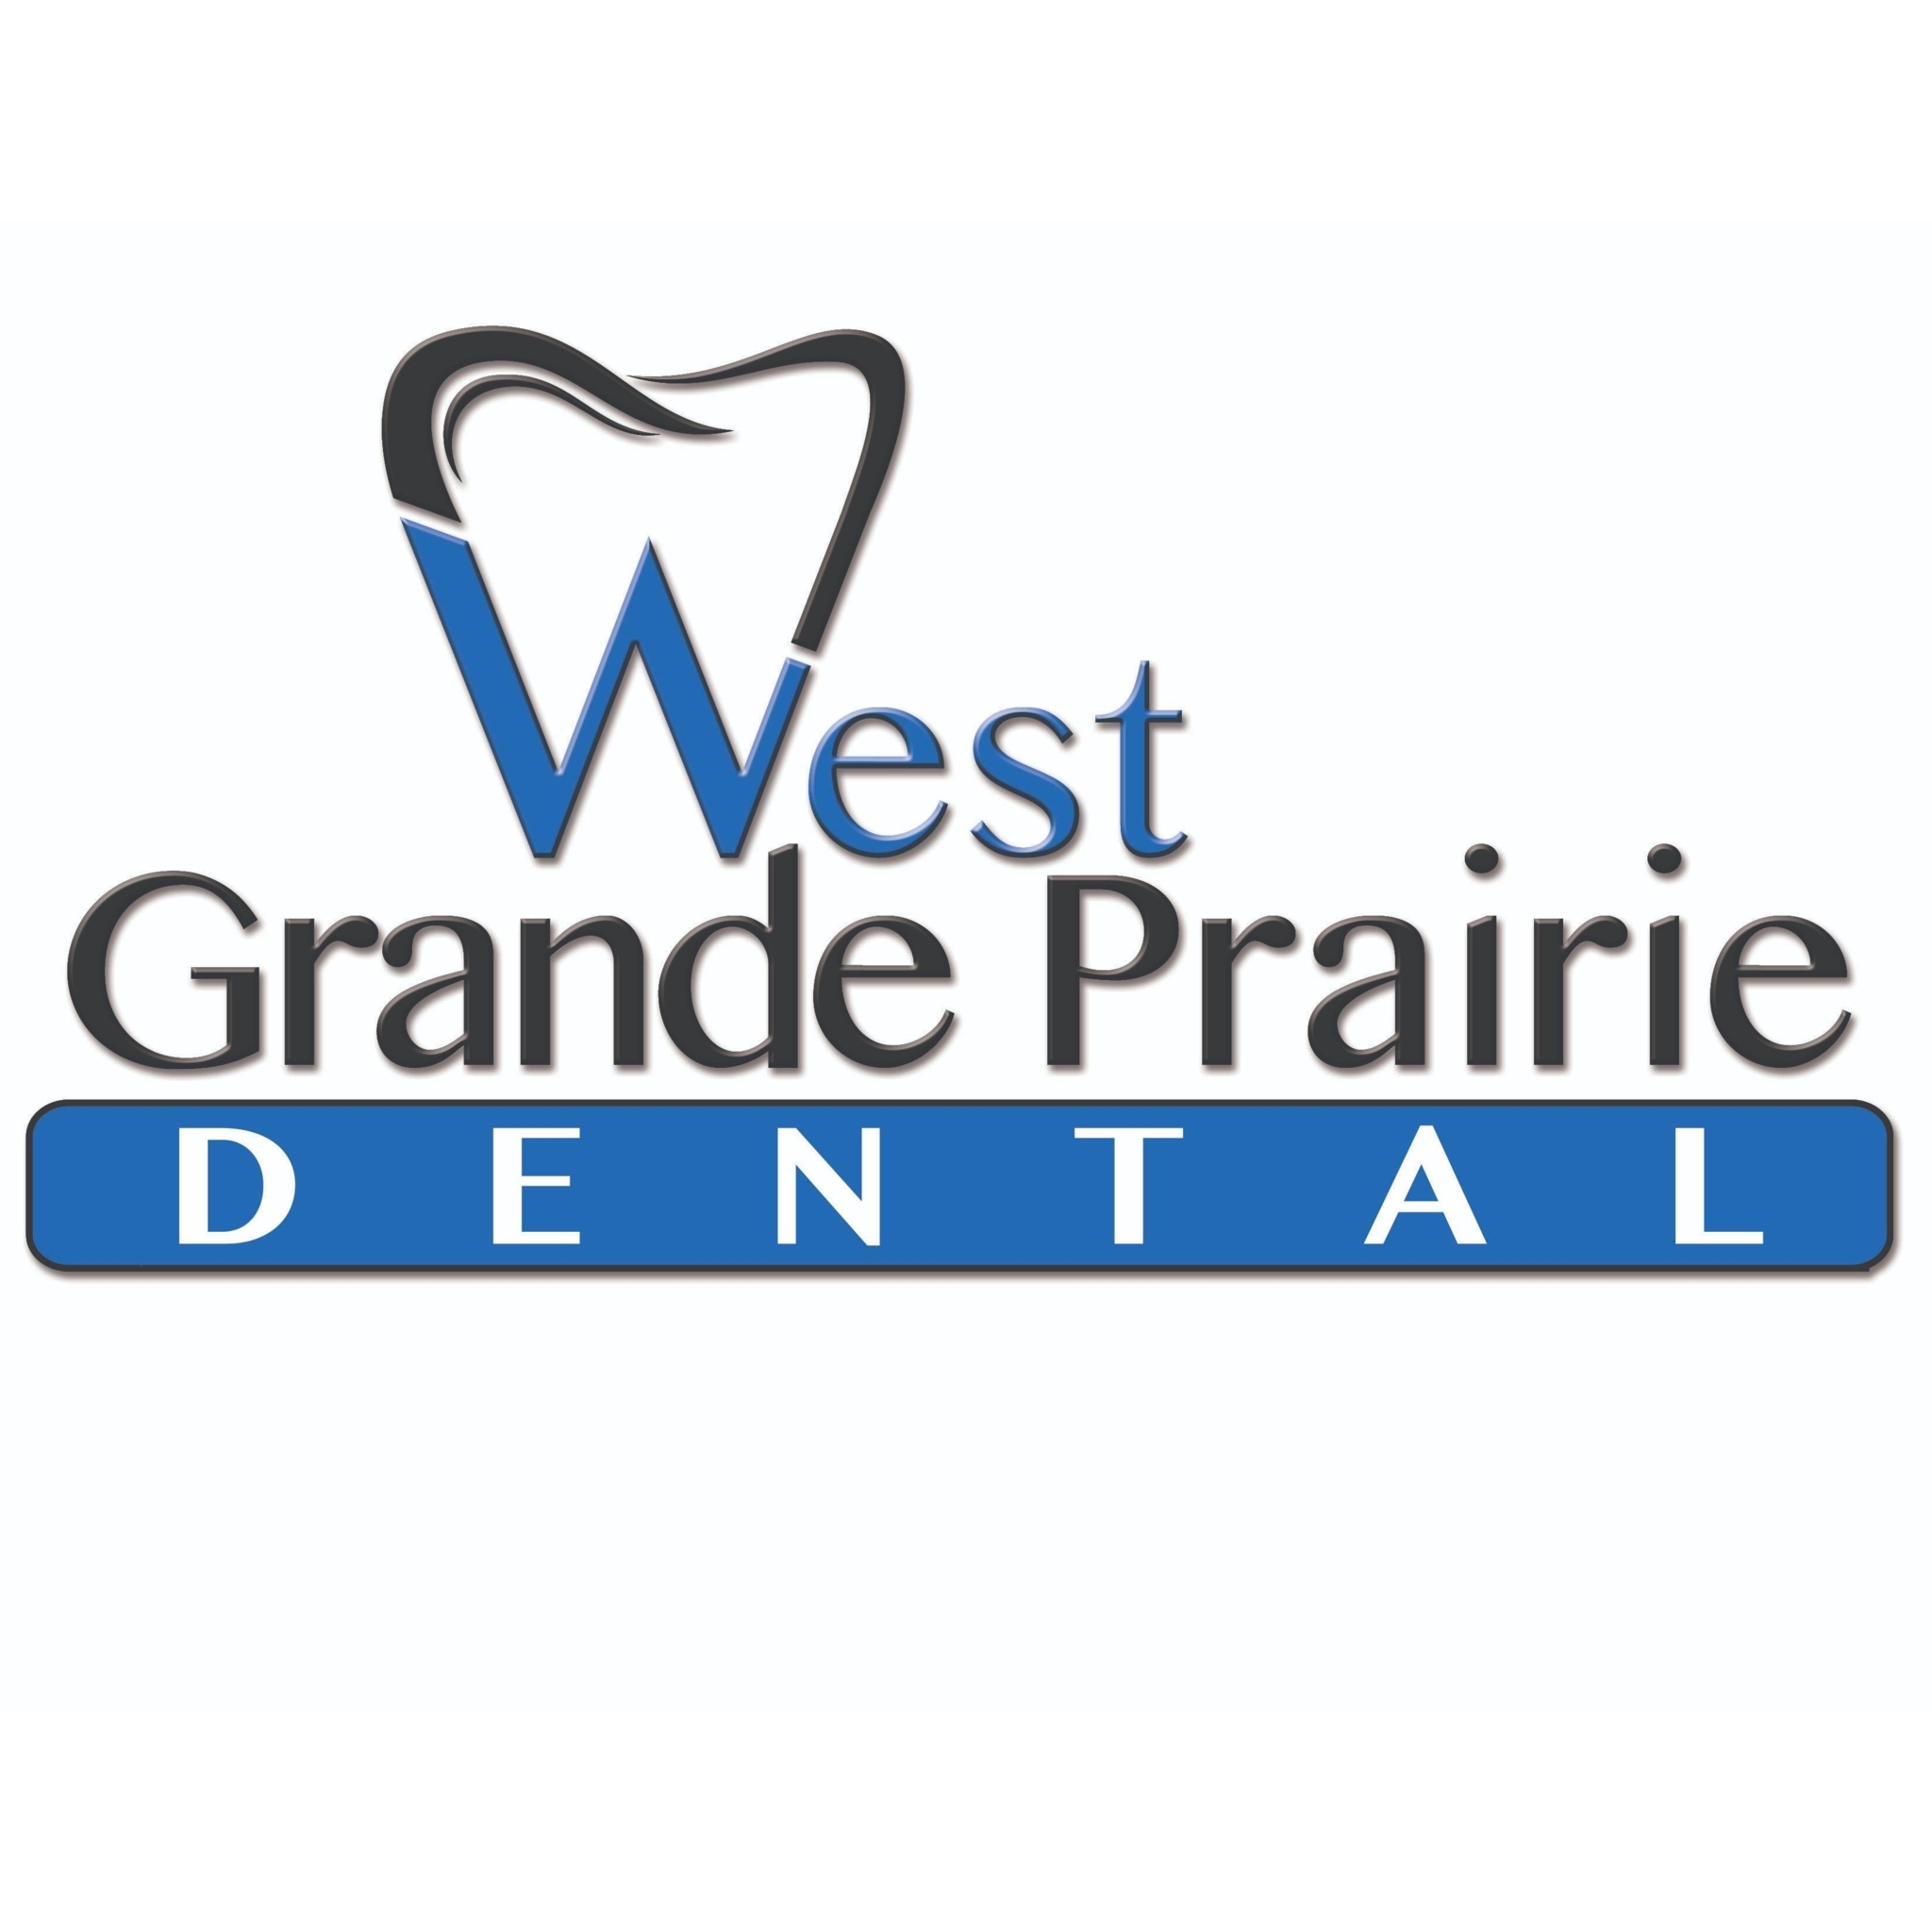 West Grande Prairie Dental - Invisalign and Implant Dentist - Westgate - Dentistes